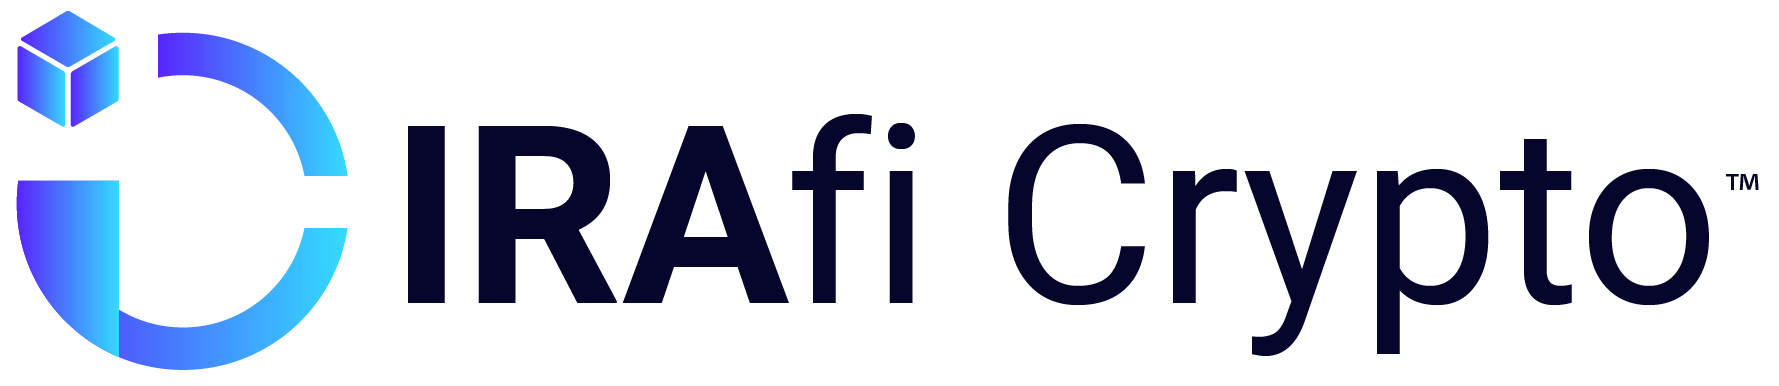 IRAFI Crypto Logo 03 cropped 1